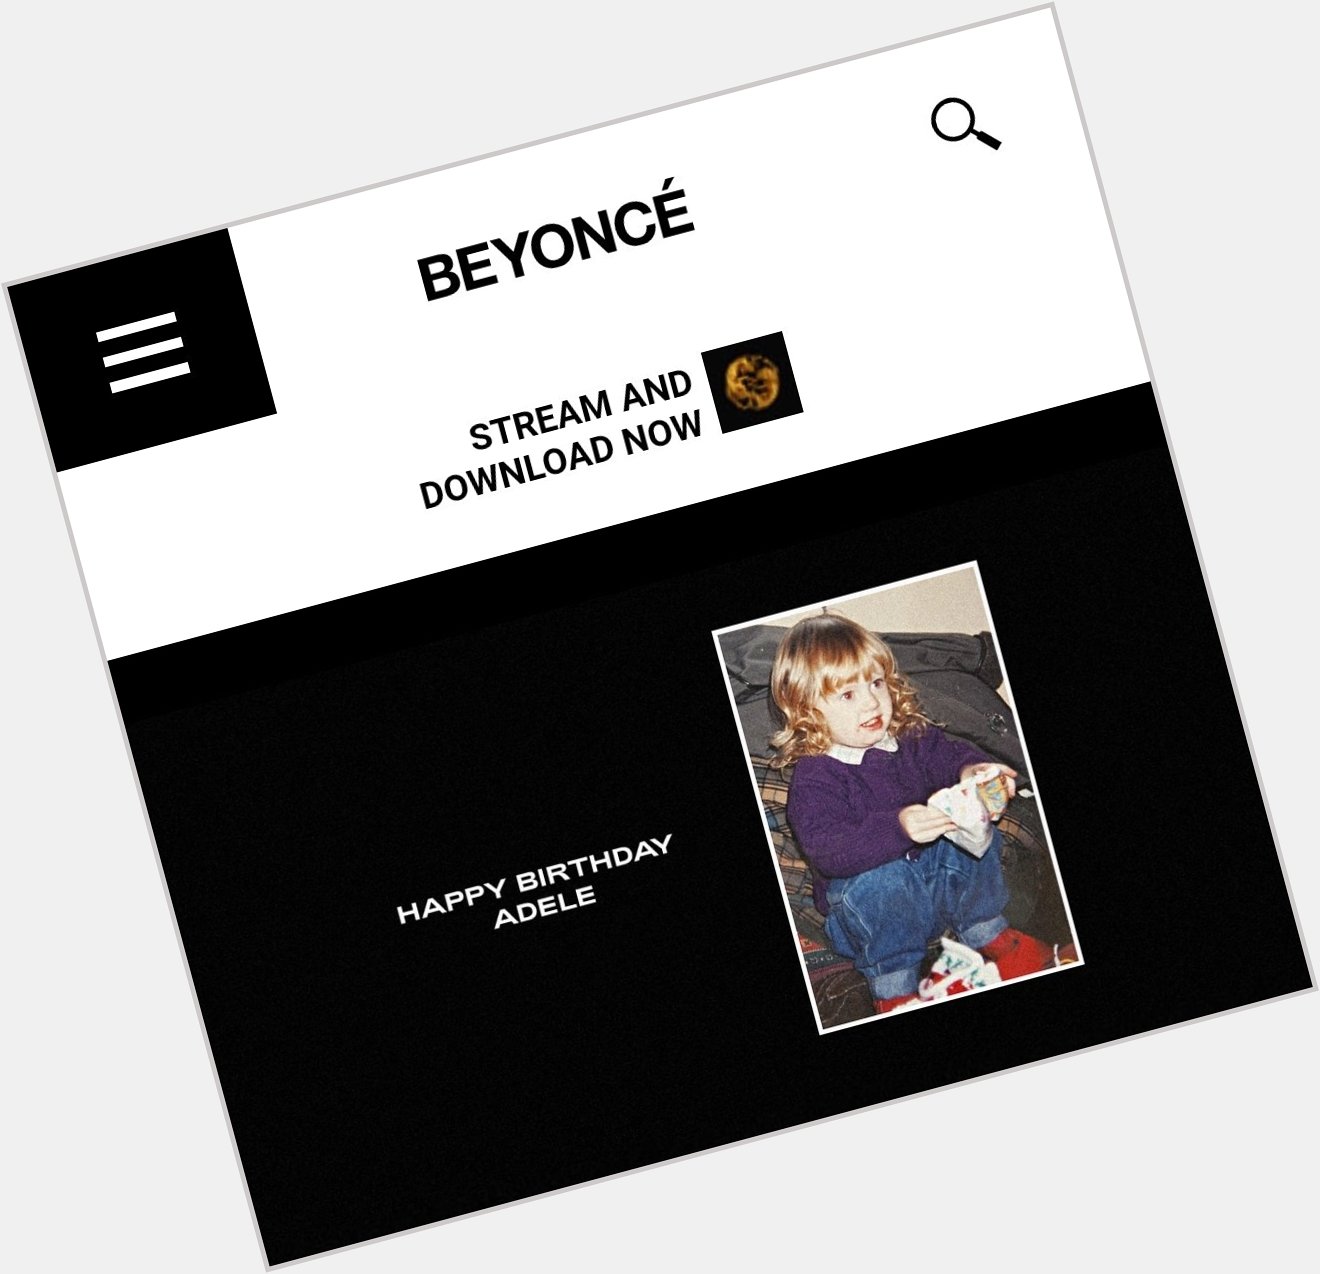 \"Happy Birthday Adele\" - Beyoncé via site oficial. 